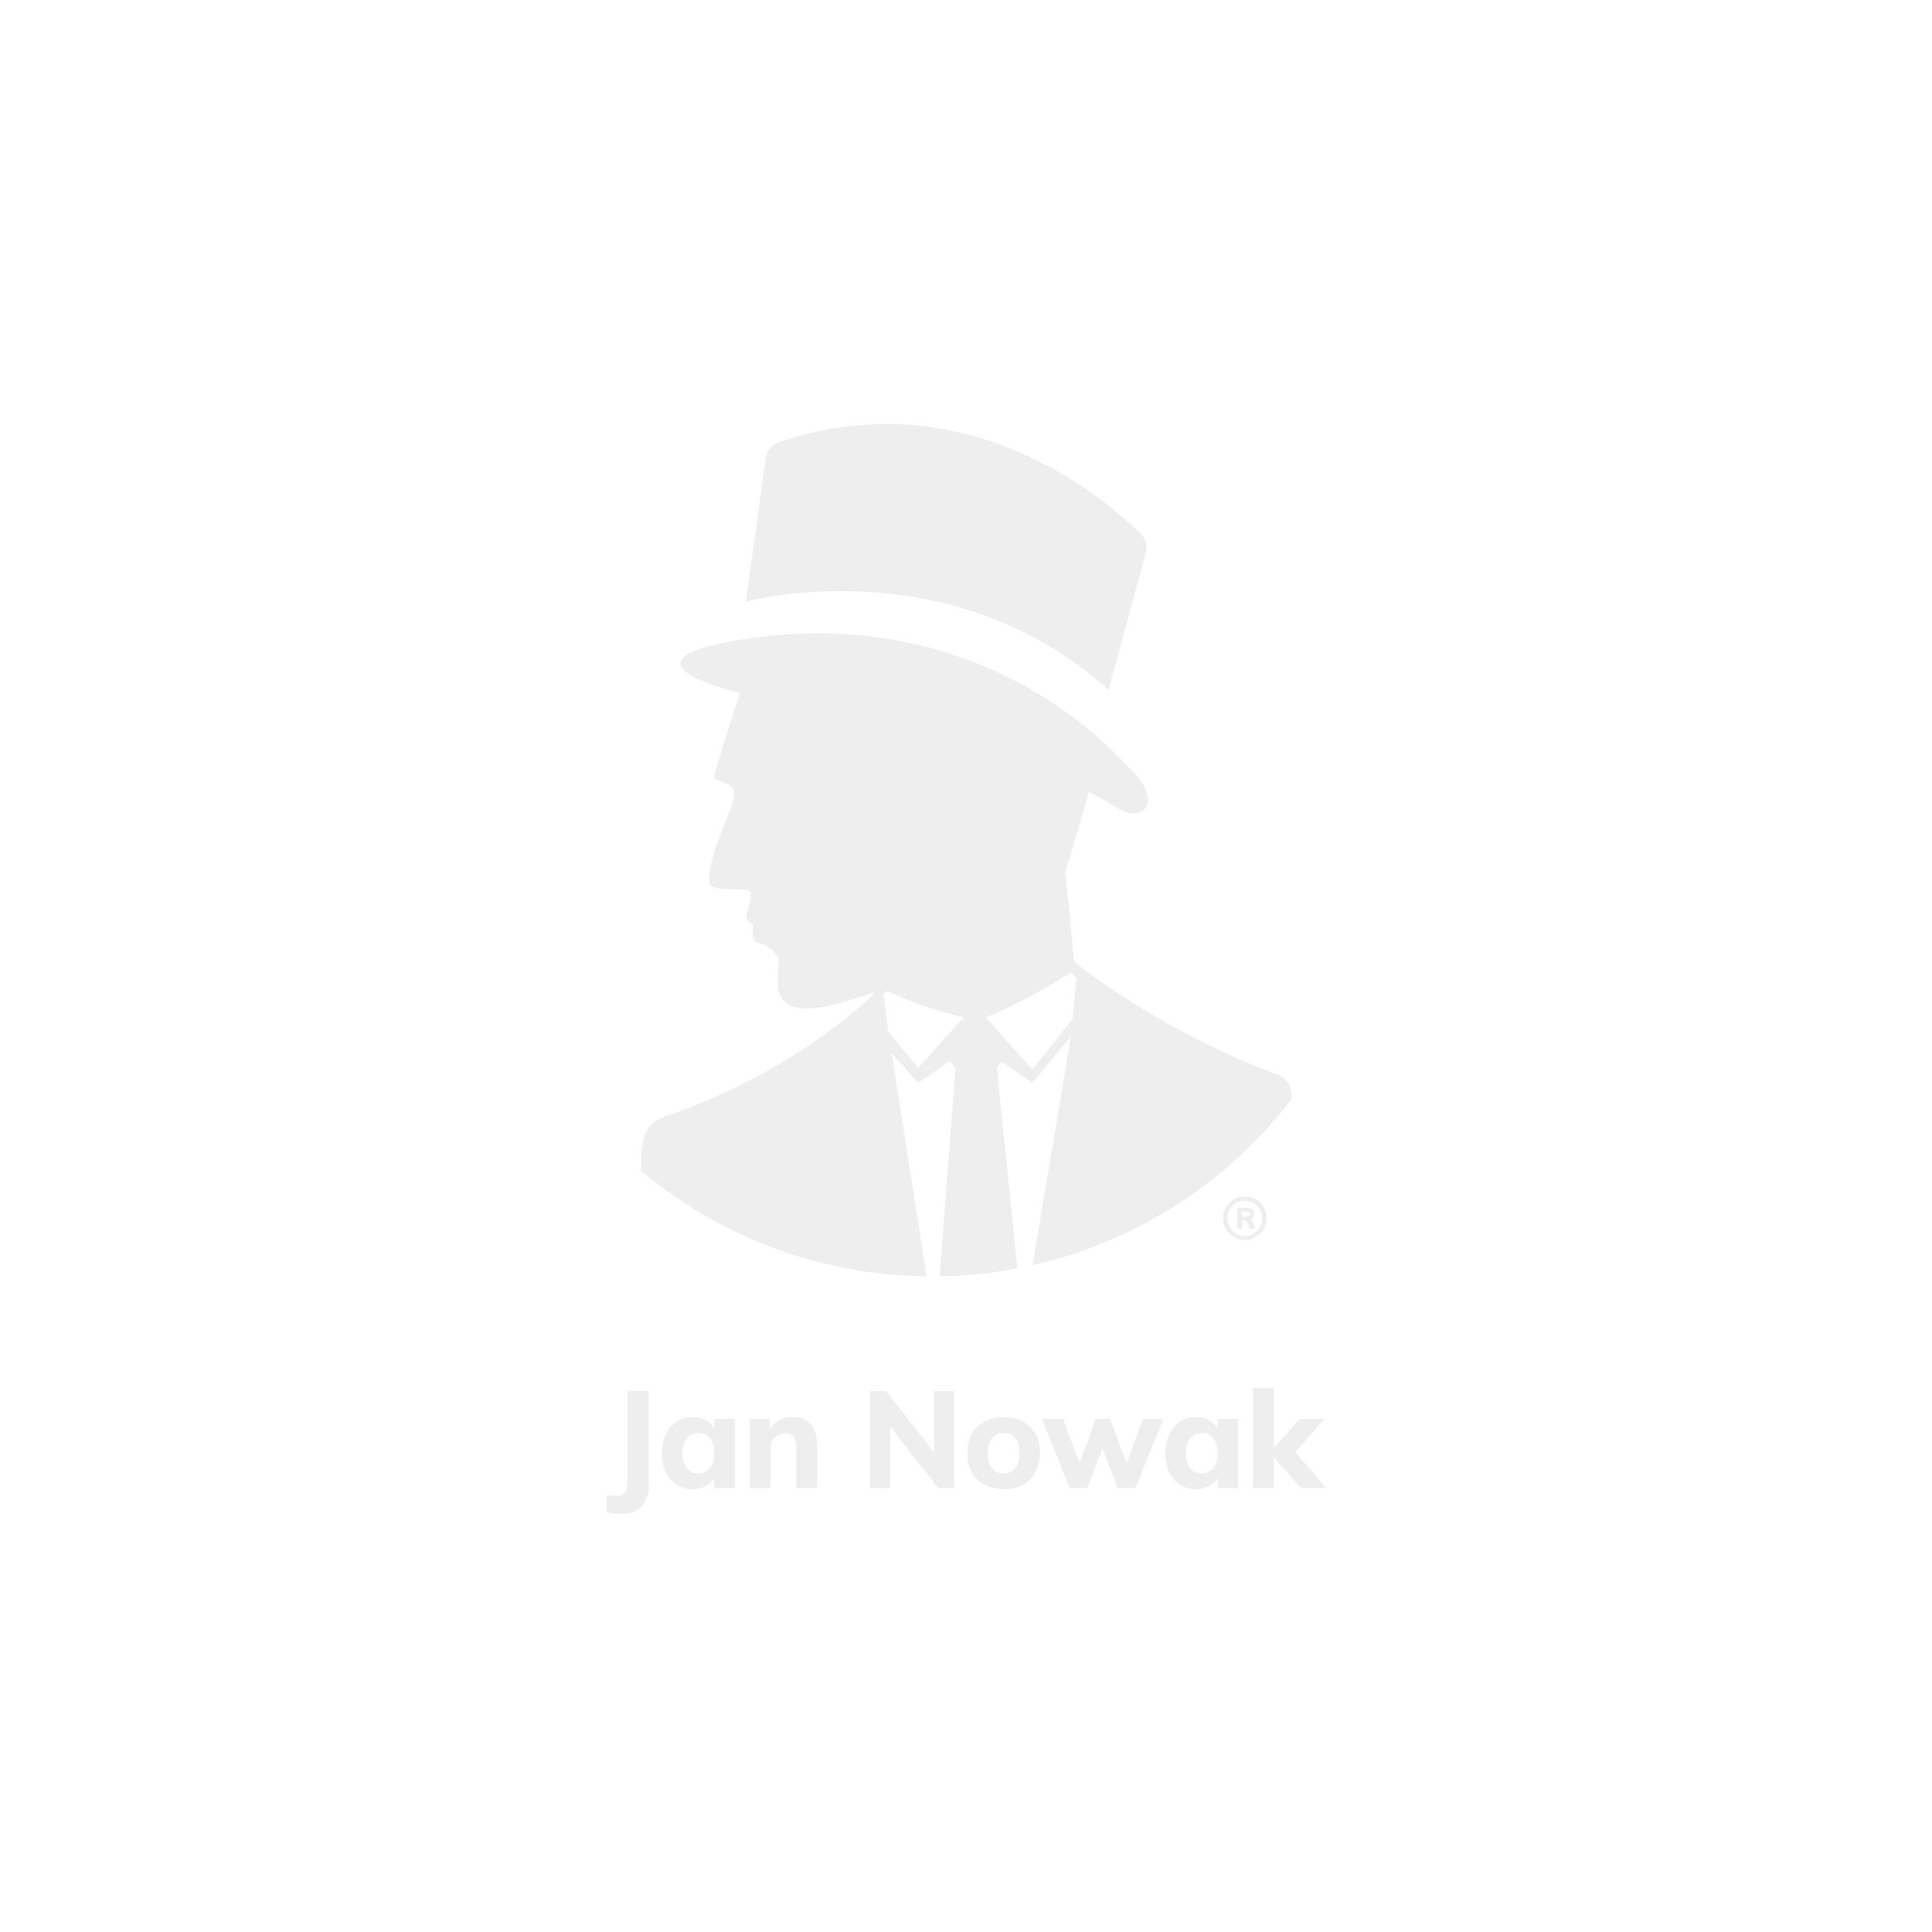 JAN NOWAK model ALEX 450x1850x400 biurowa szafa metalowa na akta: szara